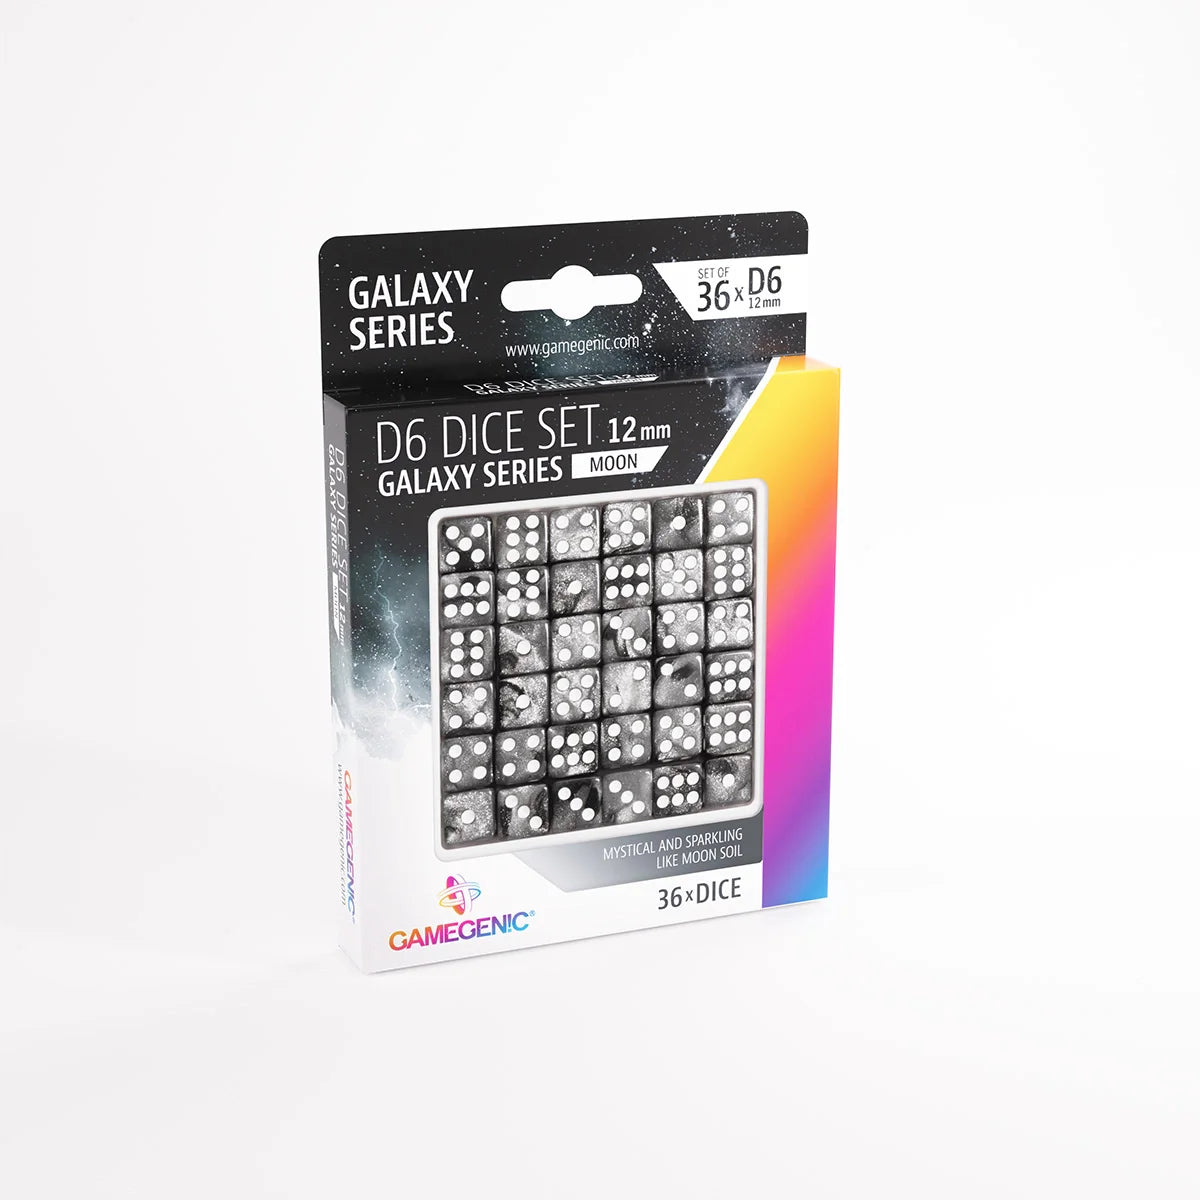 Gamegenic D6 Dice Set - Galaxy Series - Moon (36x 12mm D6)